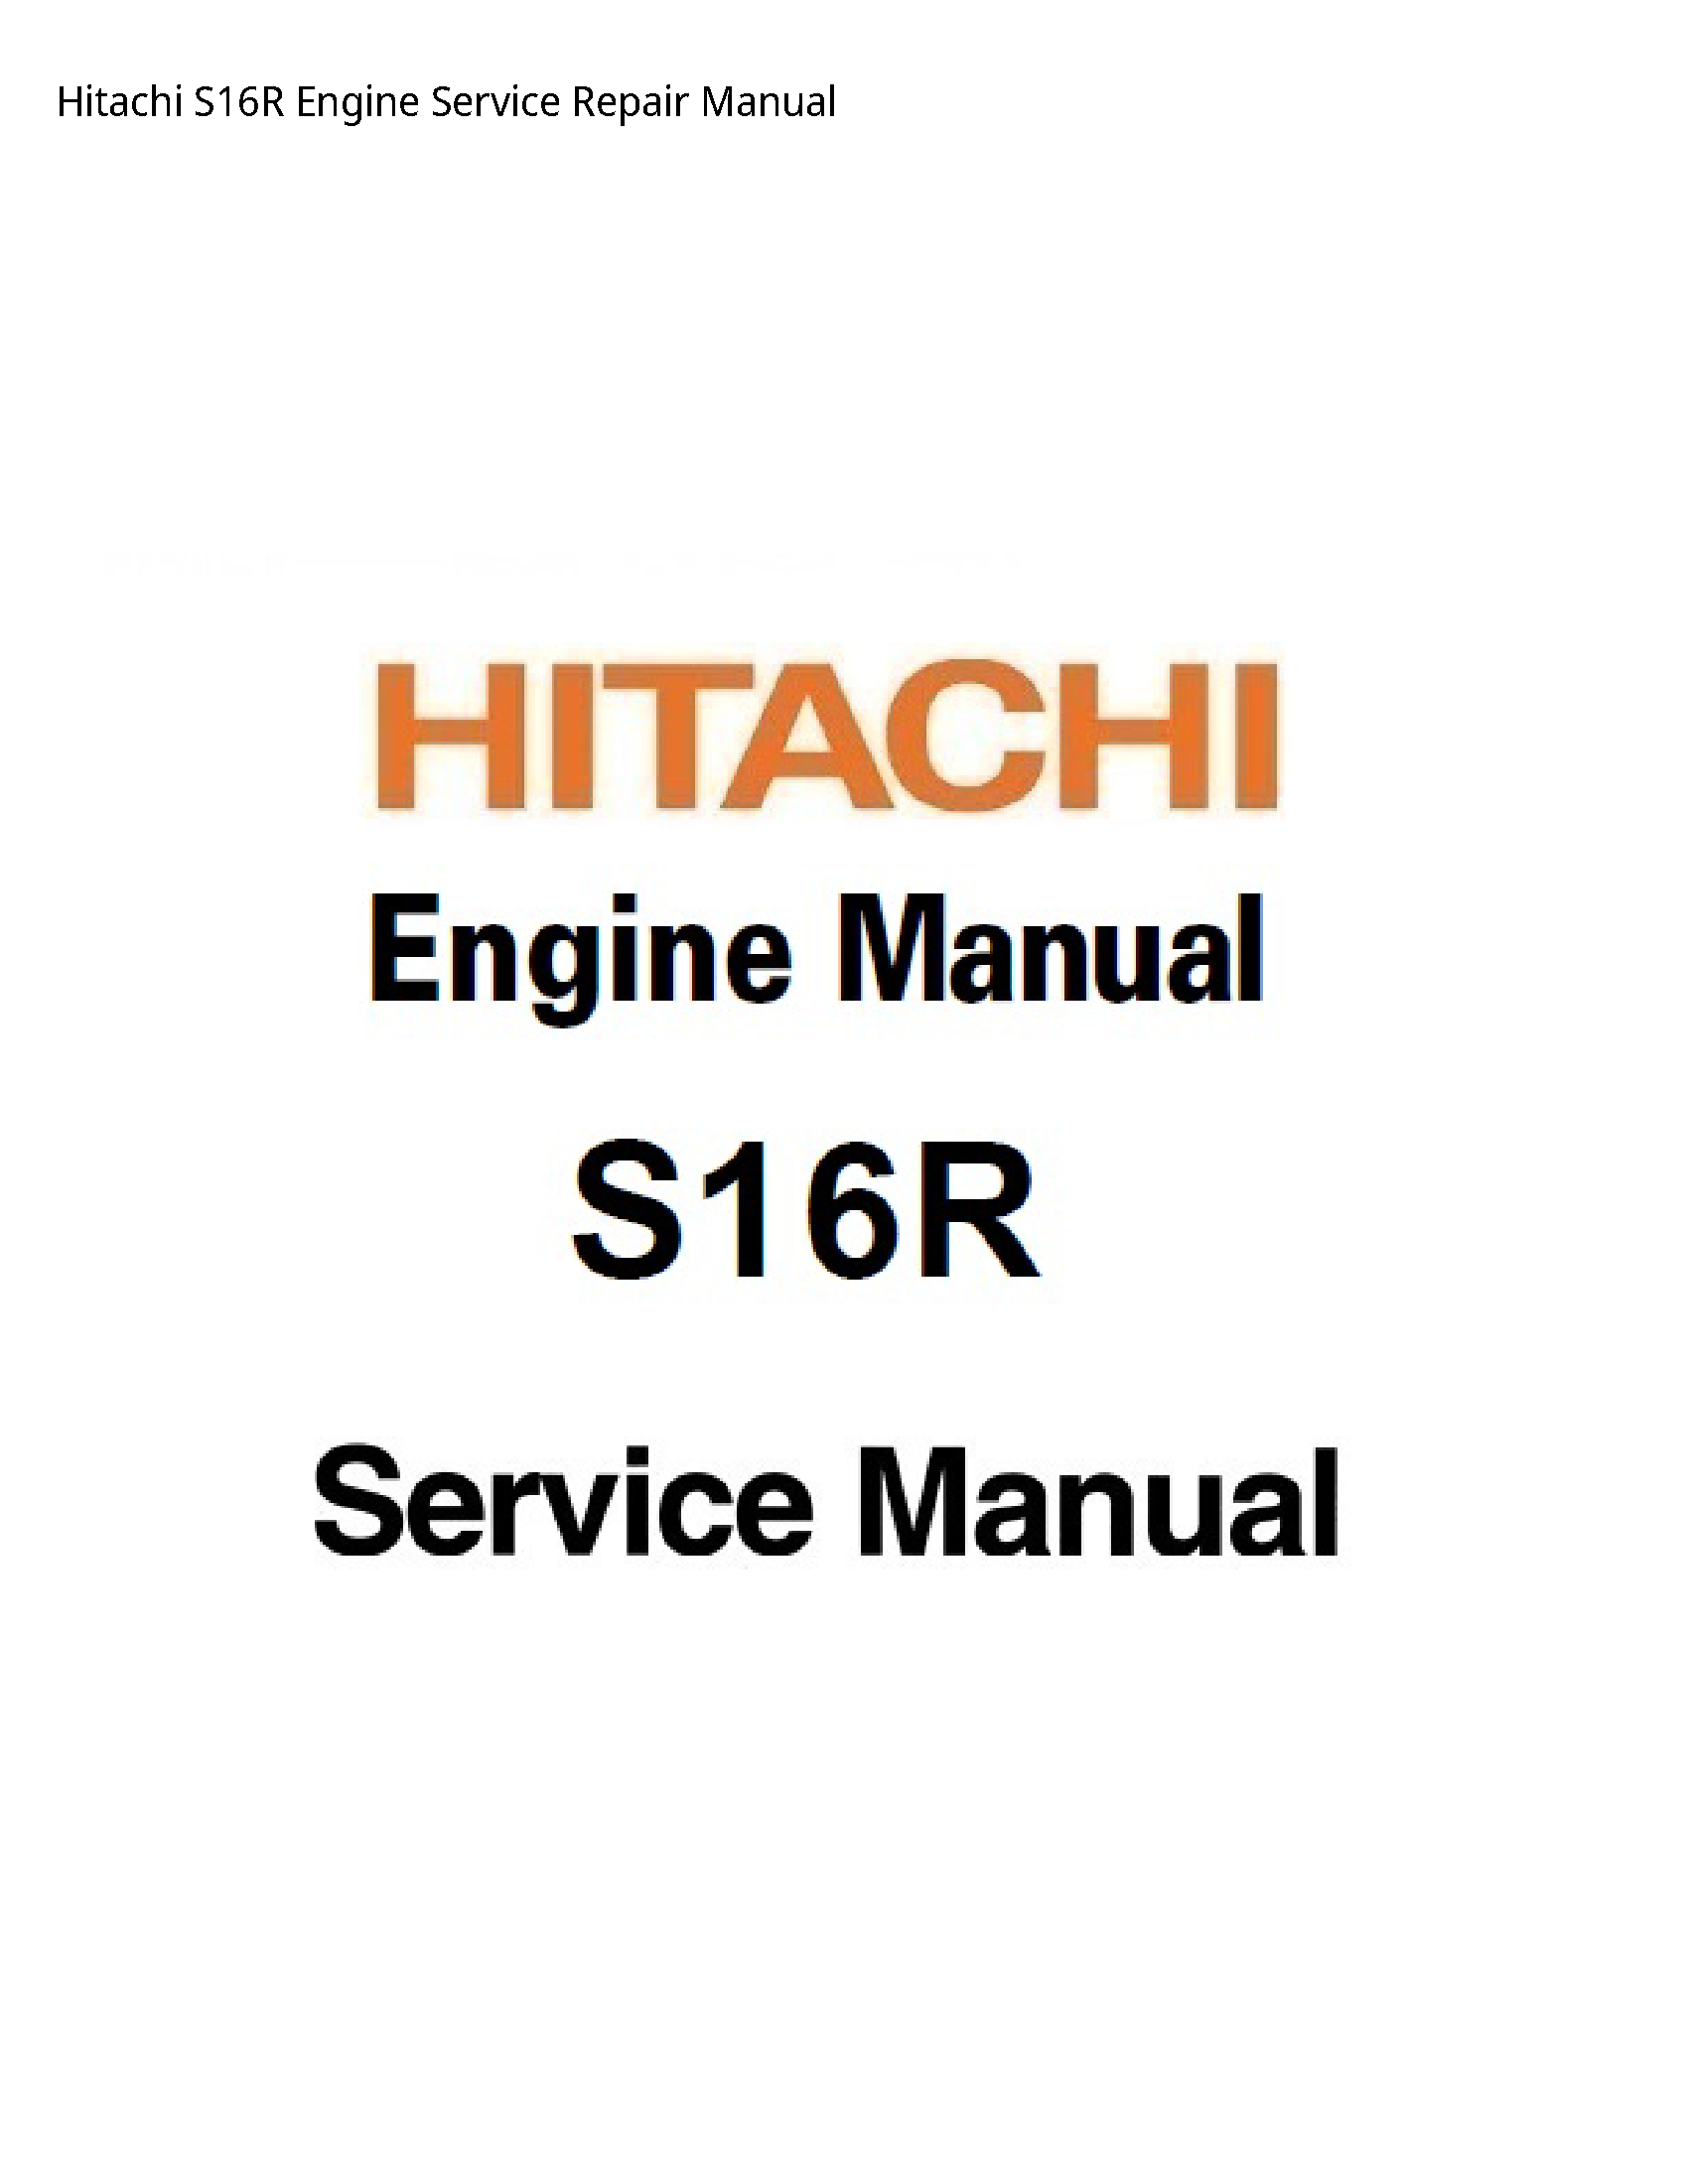 Hitachi S16R Engine manual